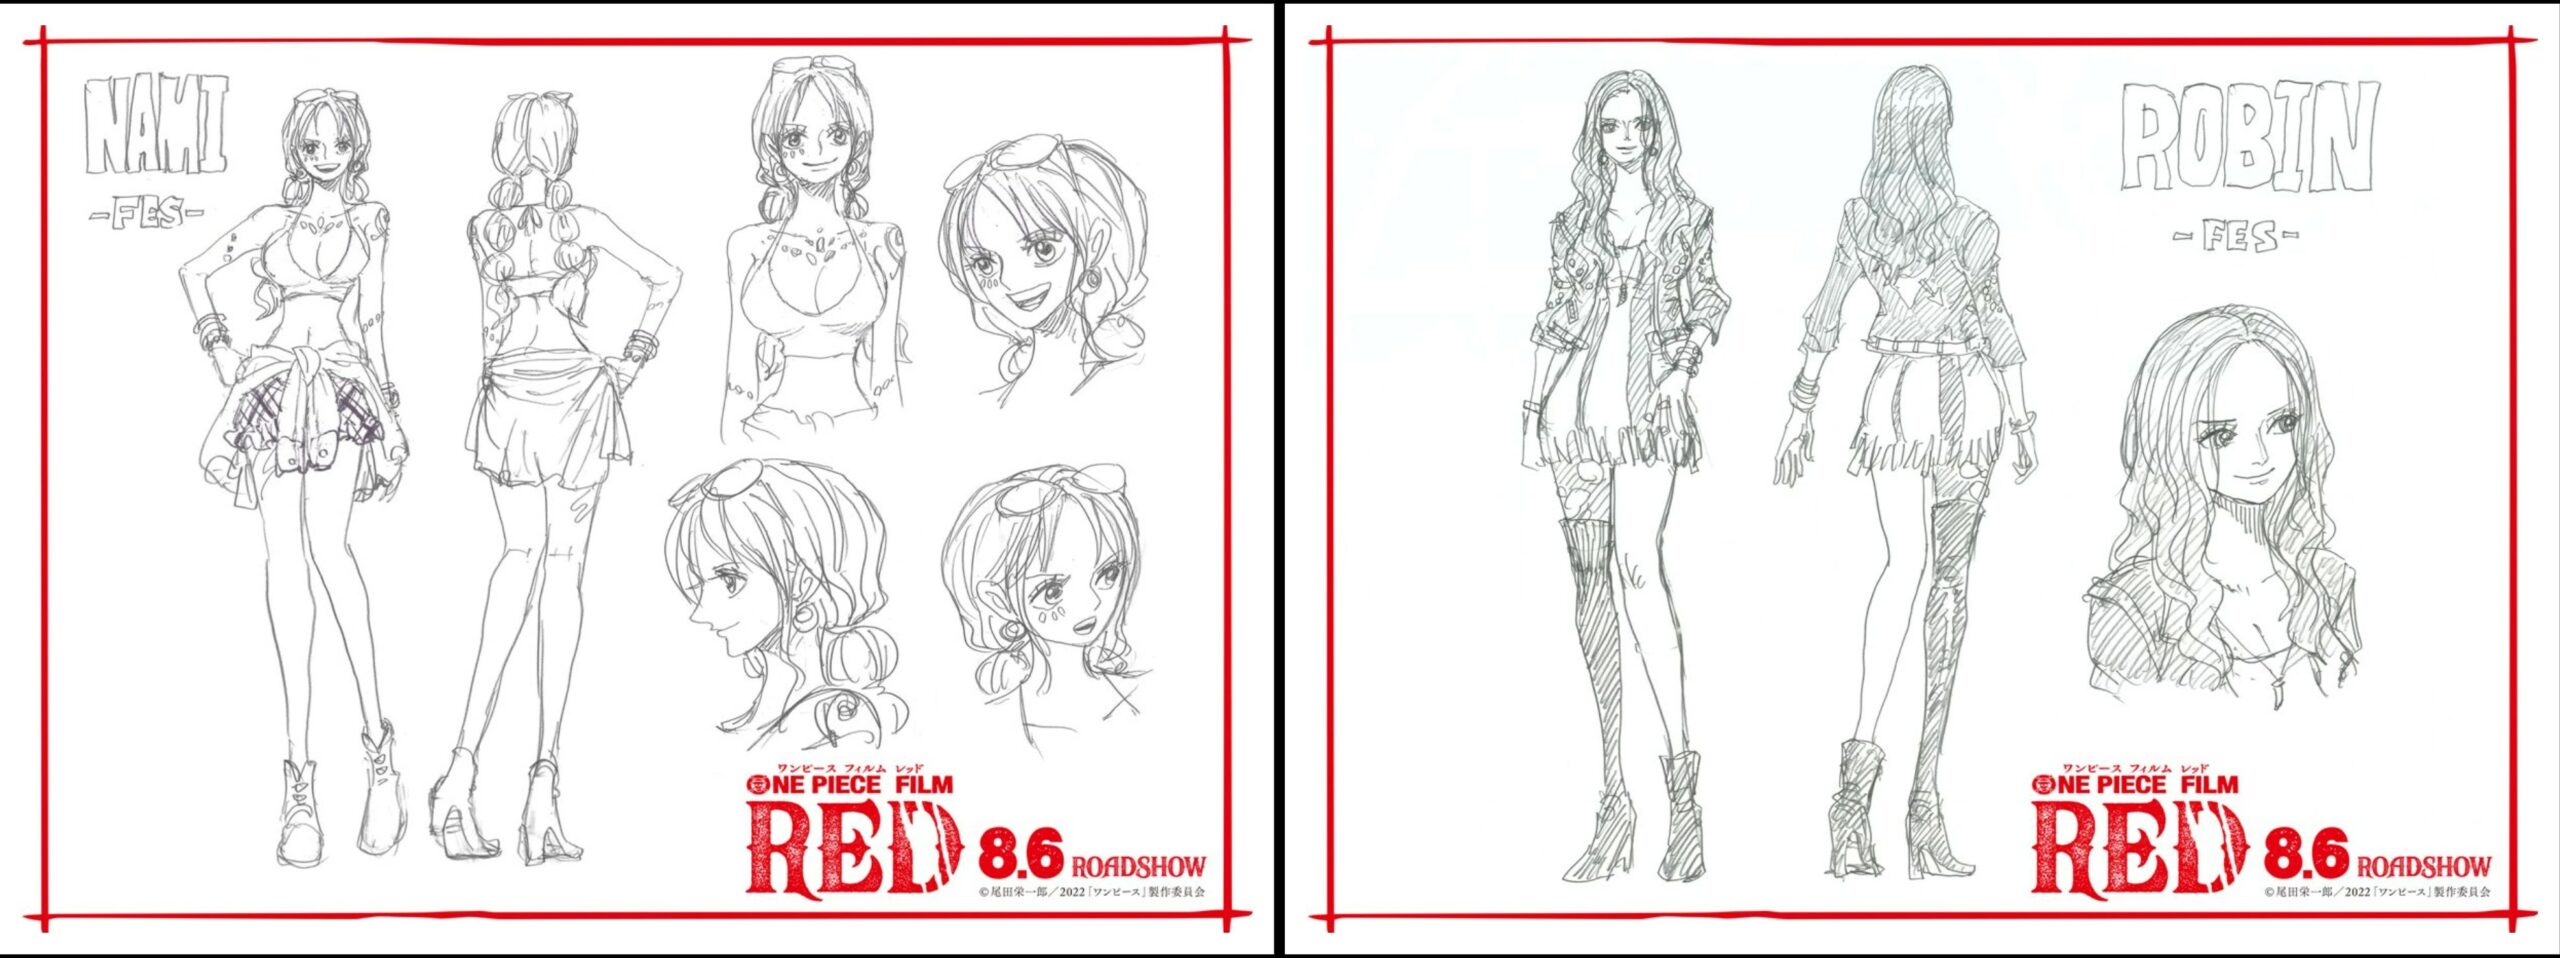 Nami and Robin (Jump Festa sketches by Eiichiro Oda)